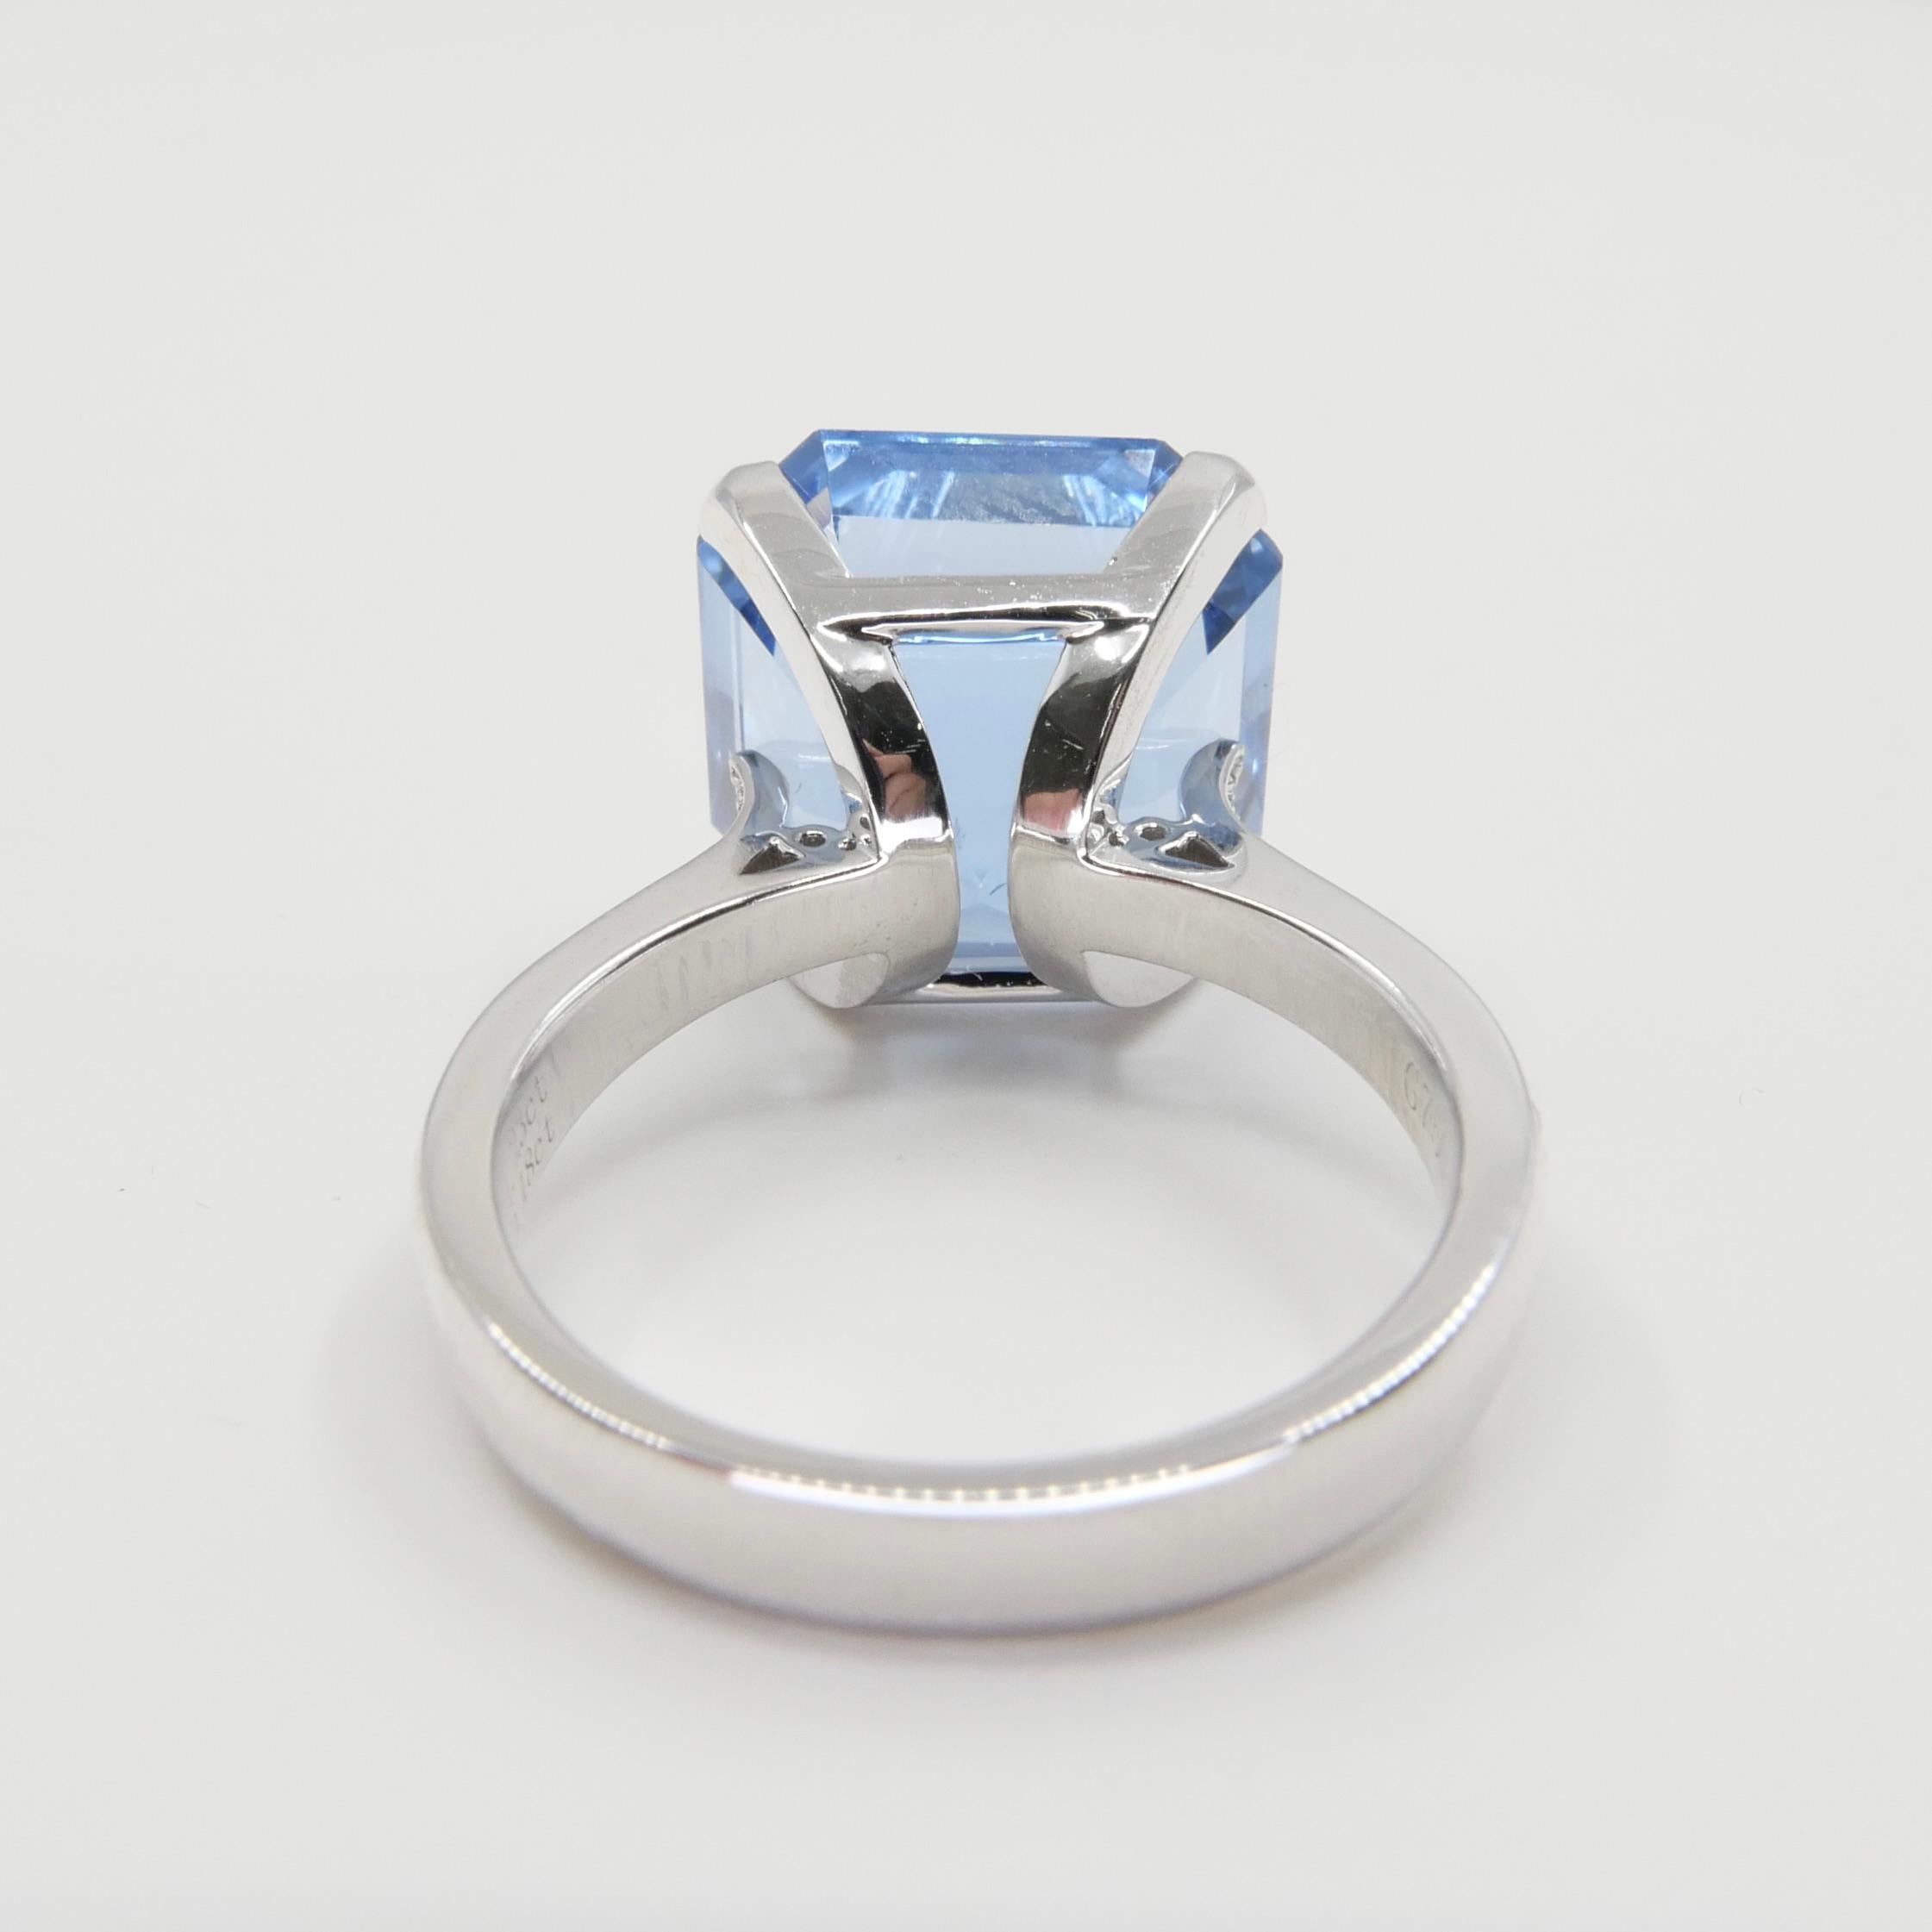 Certified 11.23 Cts Asscher Cut Aquamarine Diamond Ring, True Santa Maria Color 10